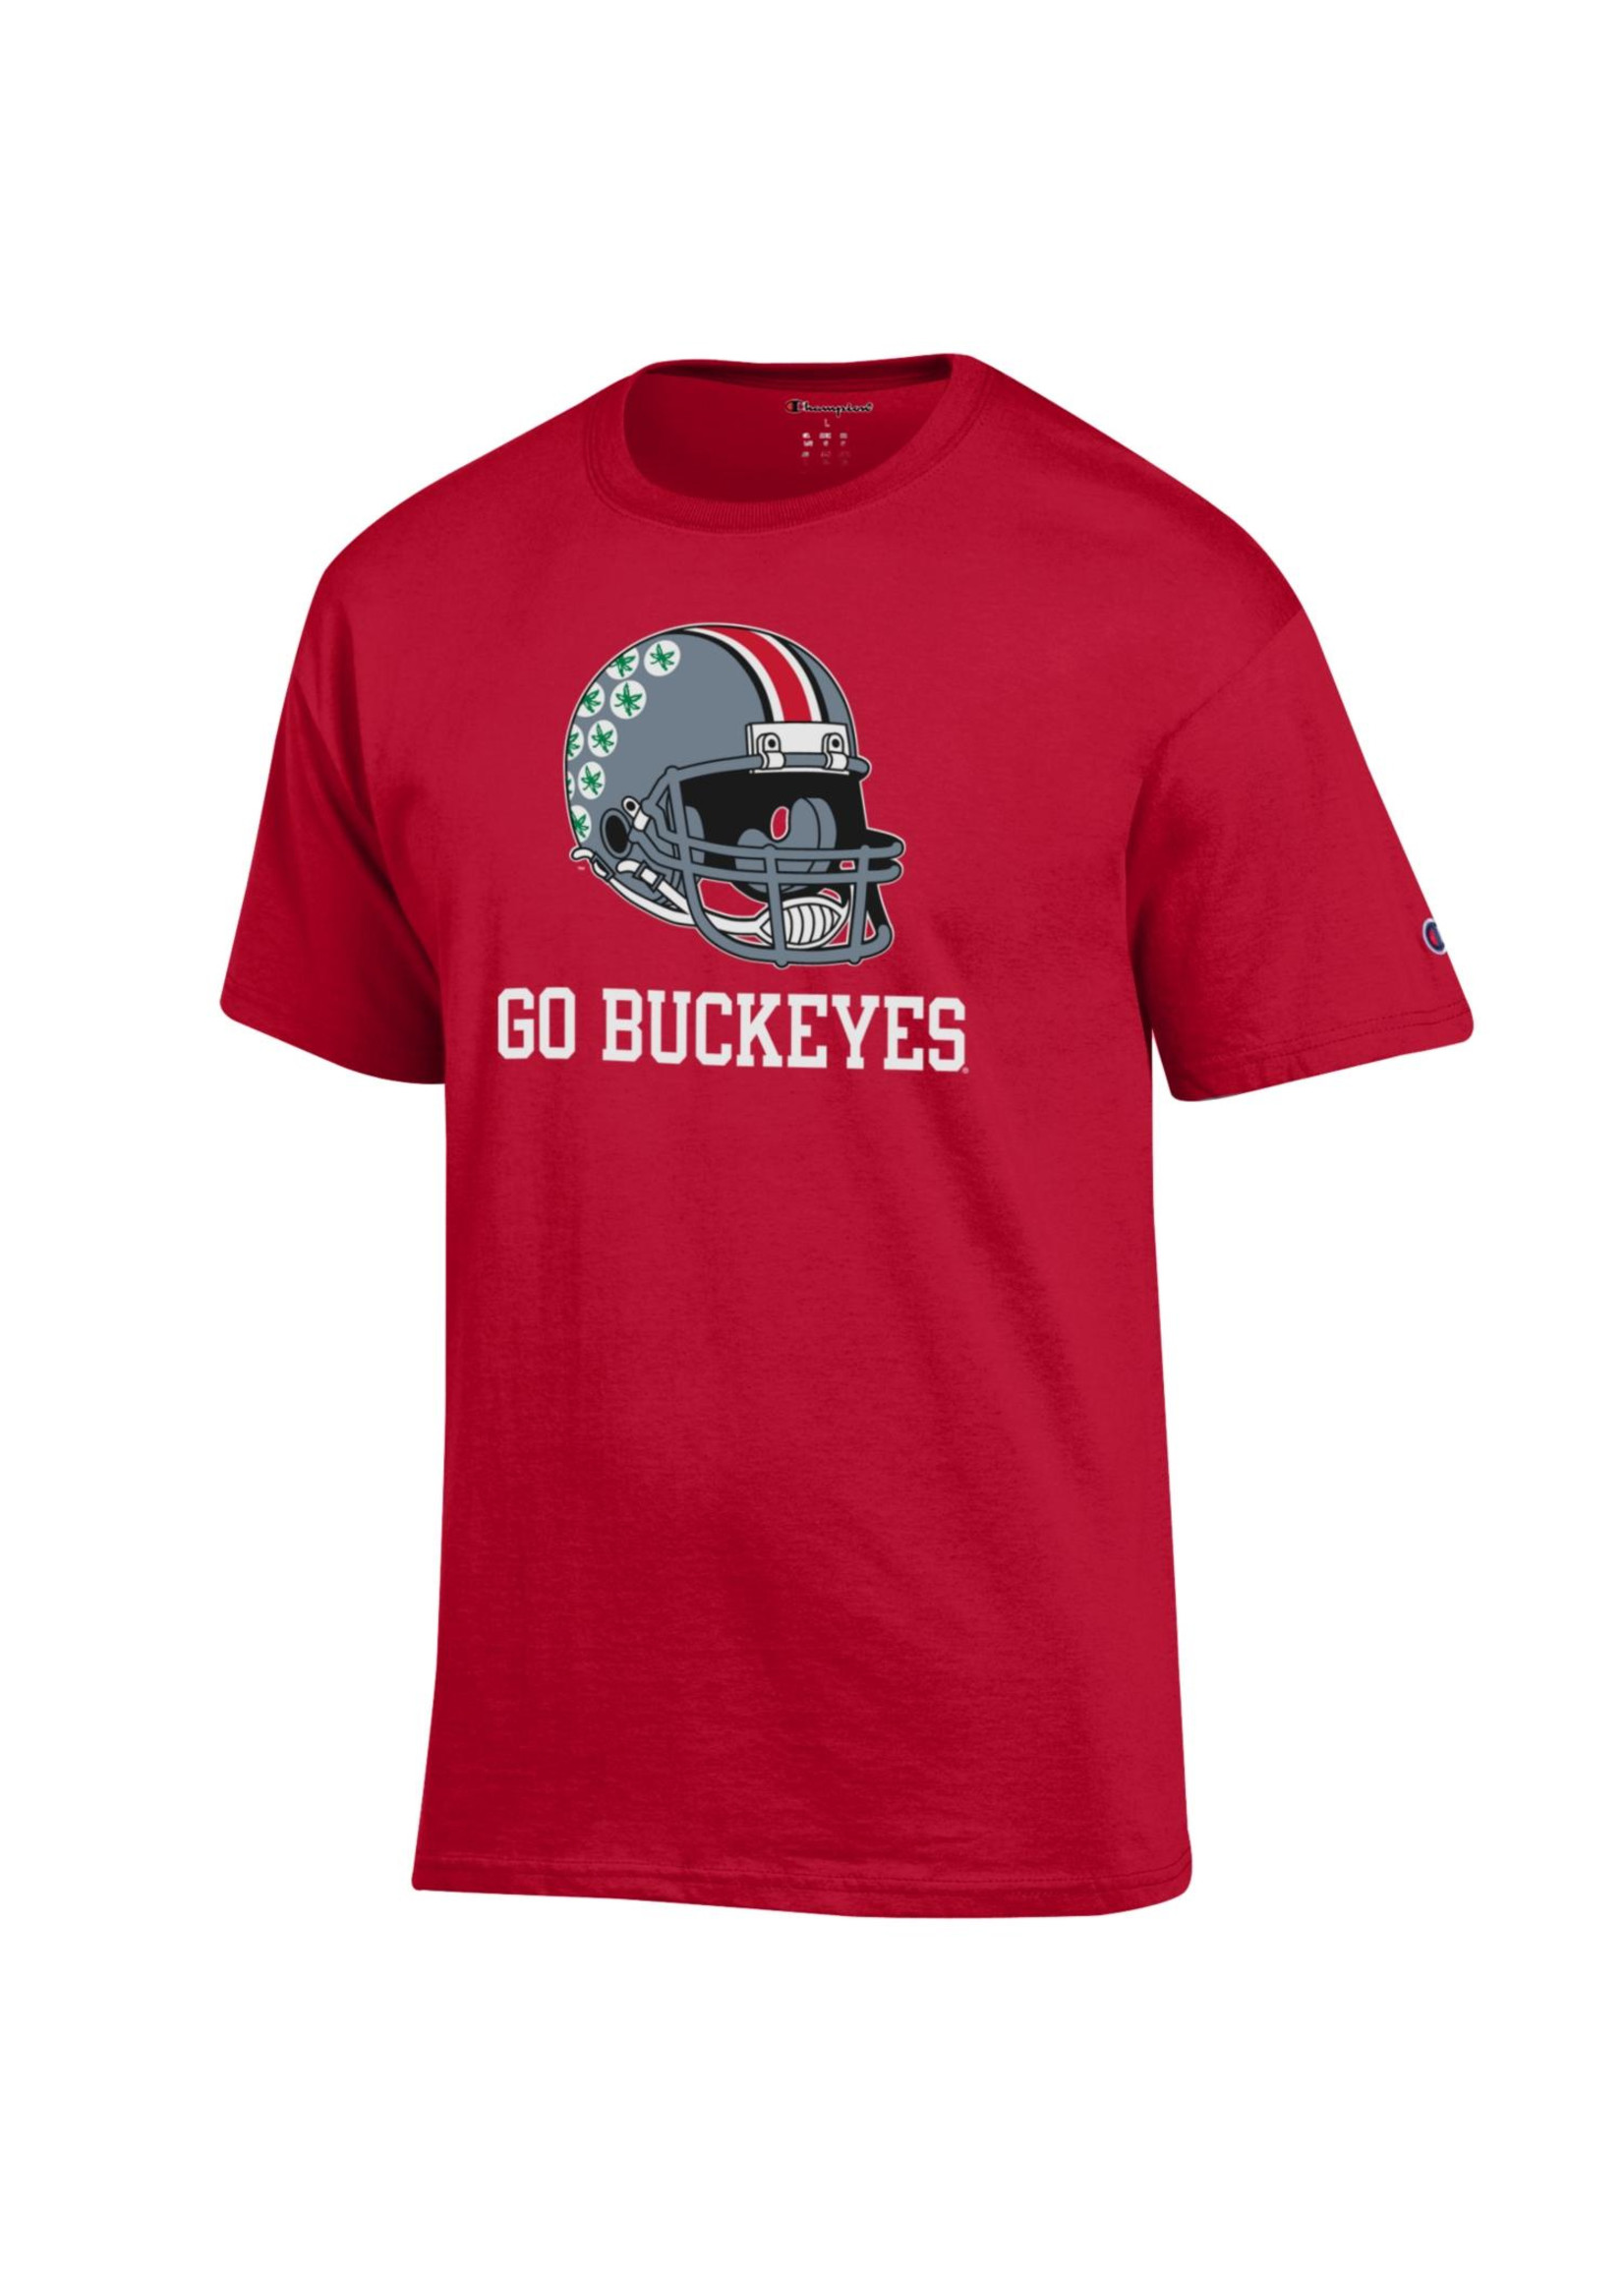 Champion Ohio State Buckeyes "Go Buckeyes" Helmet Tee